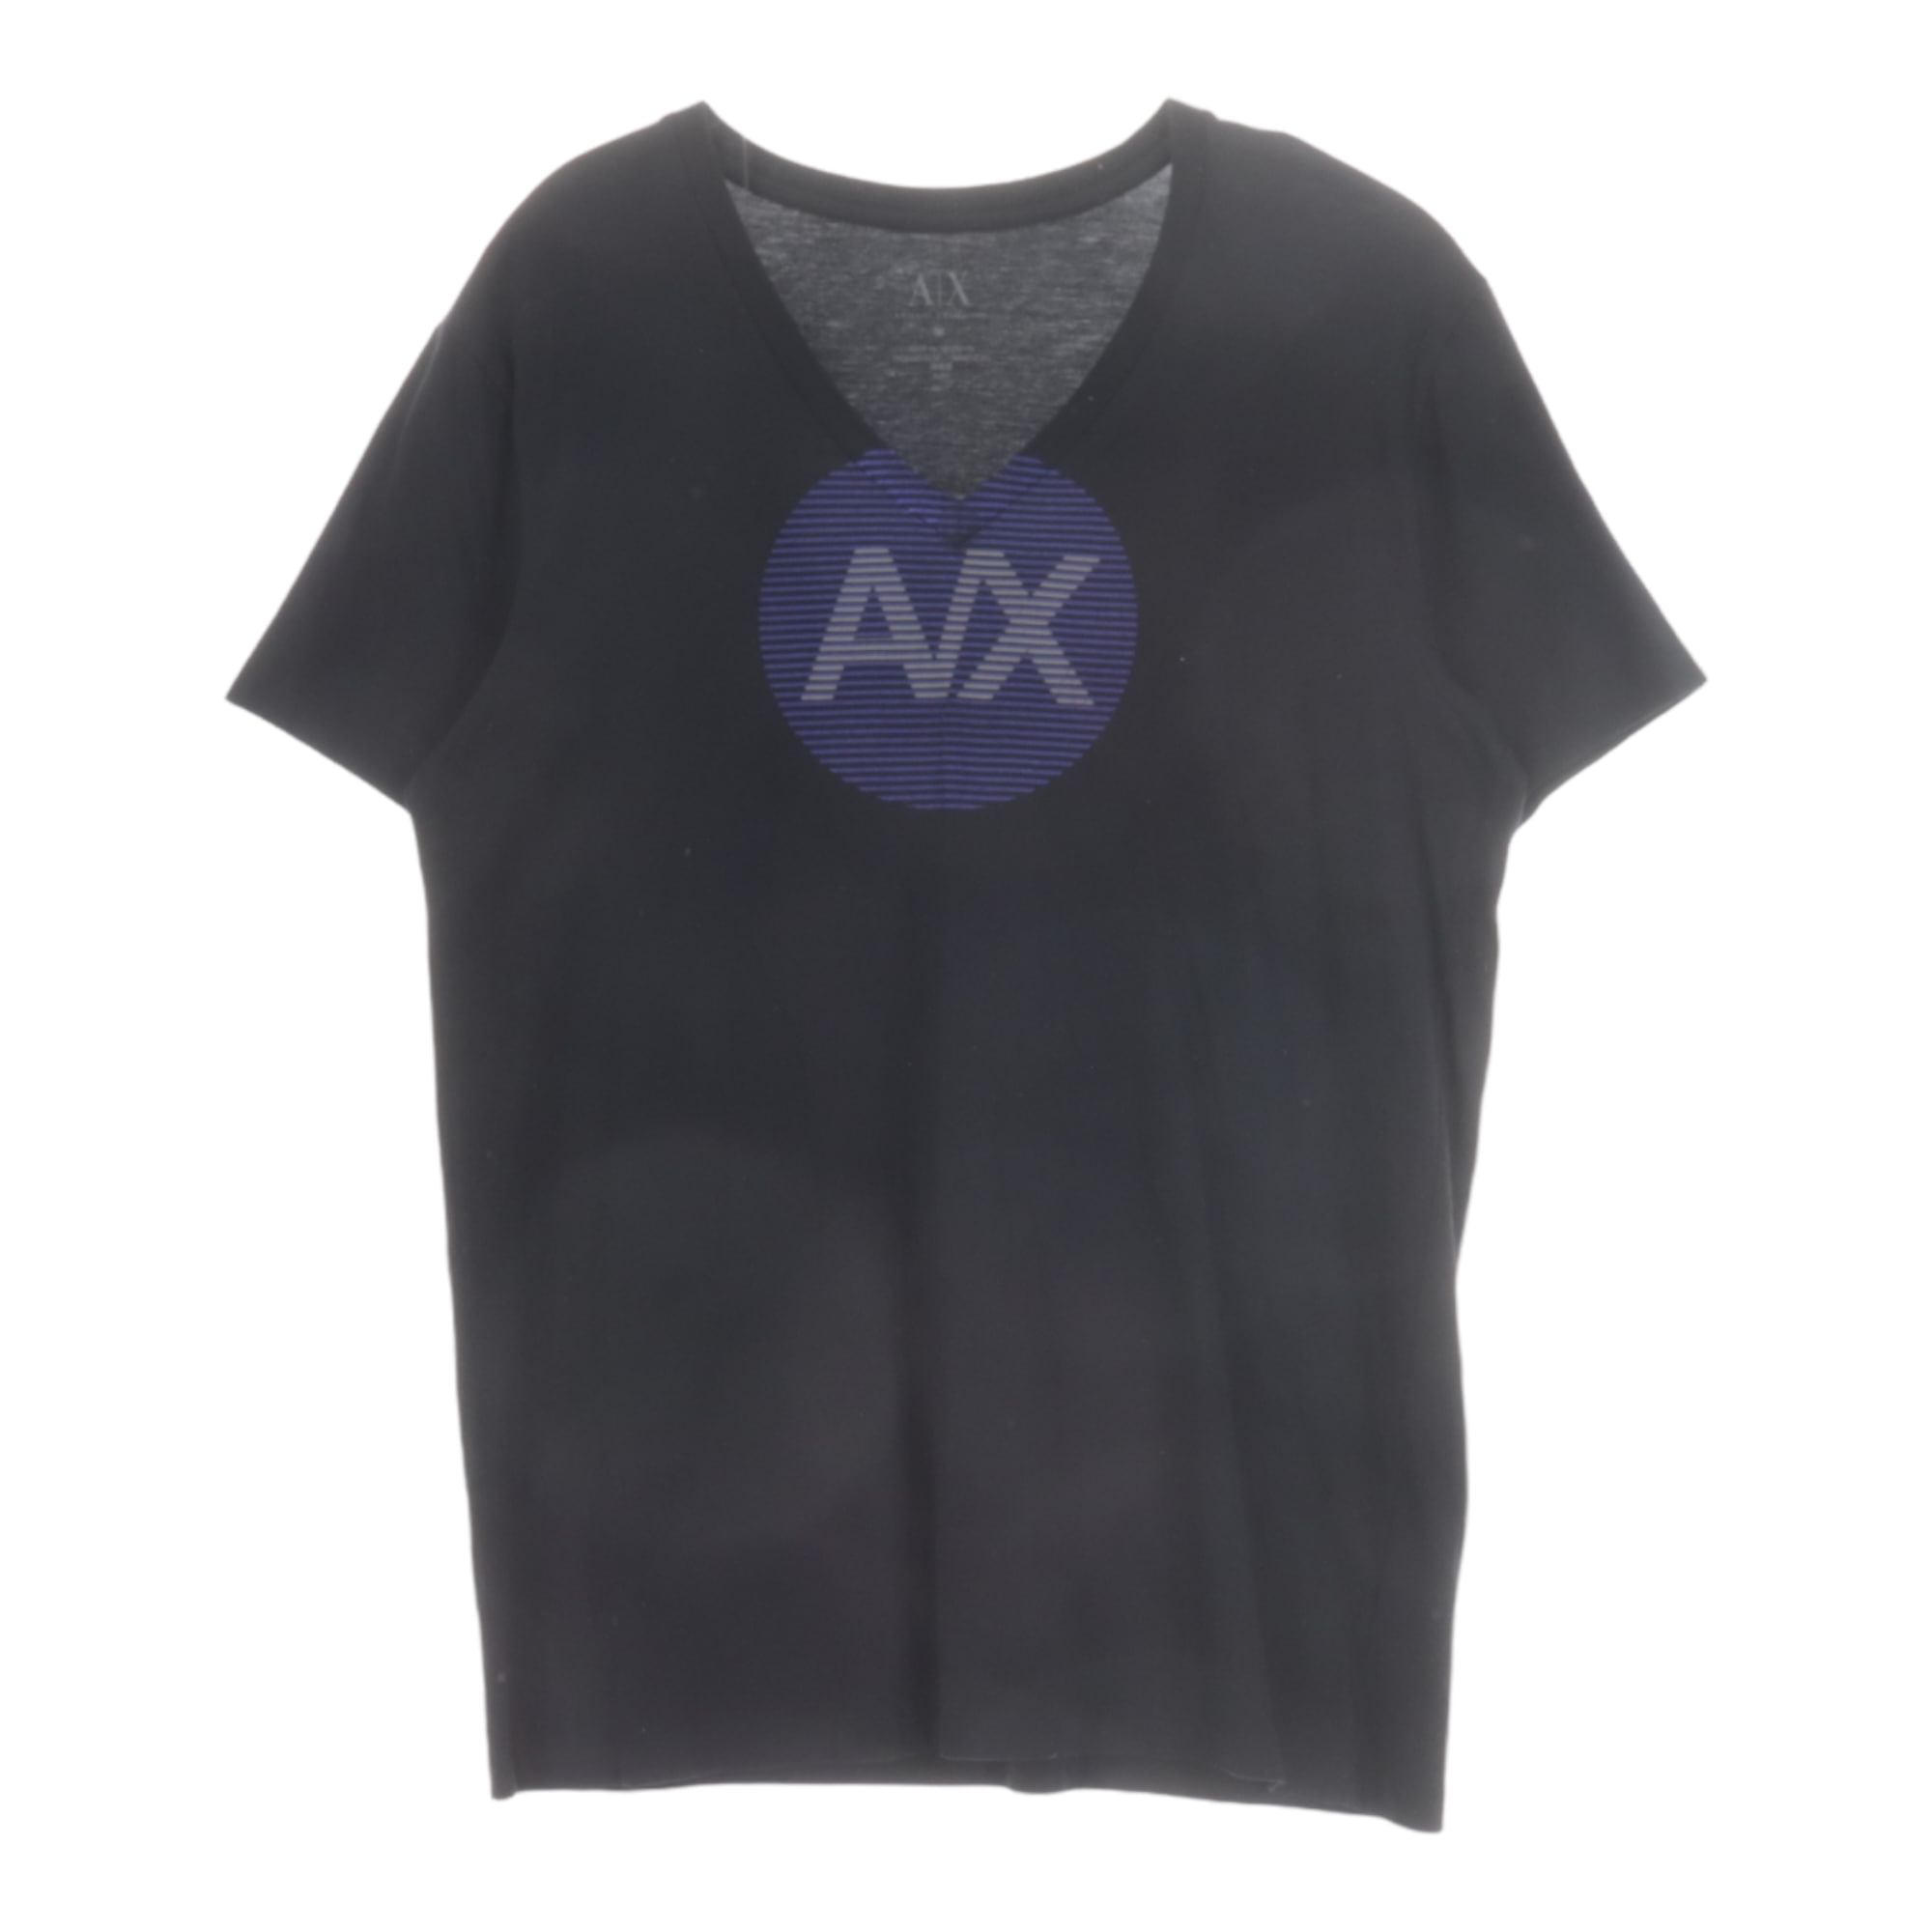 Armani Exchange,T-Shirts